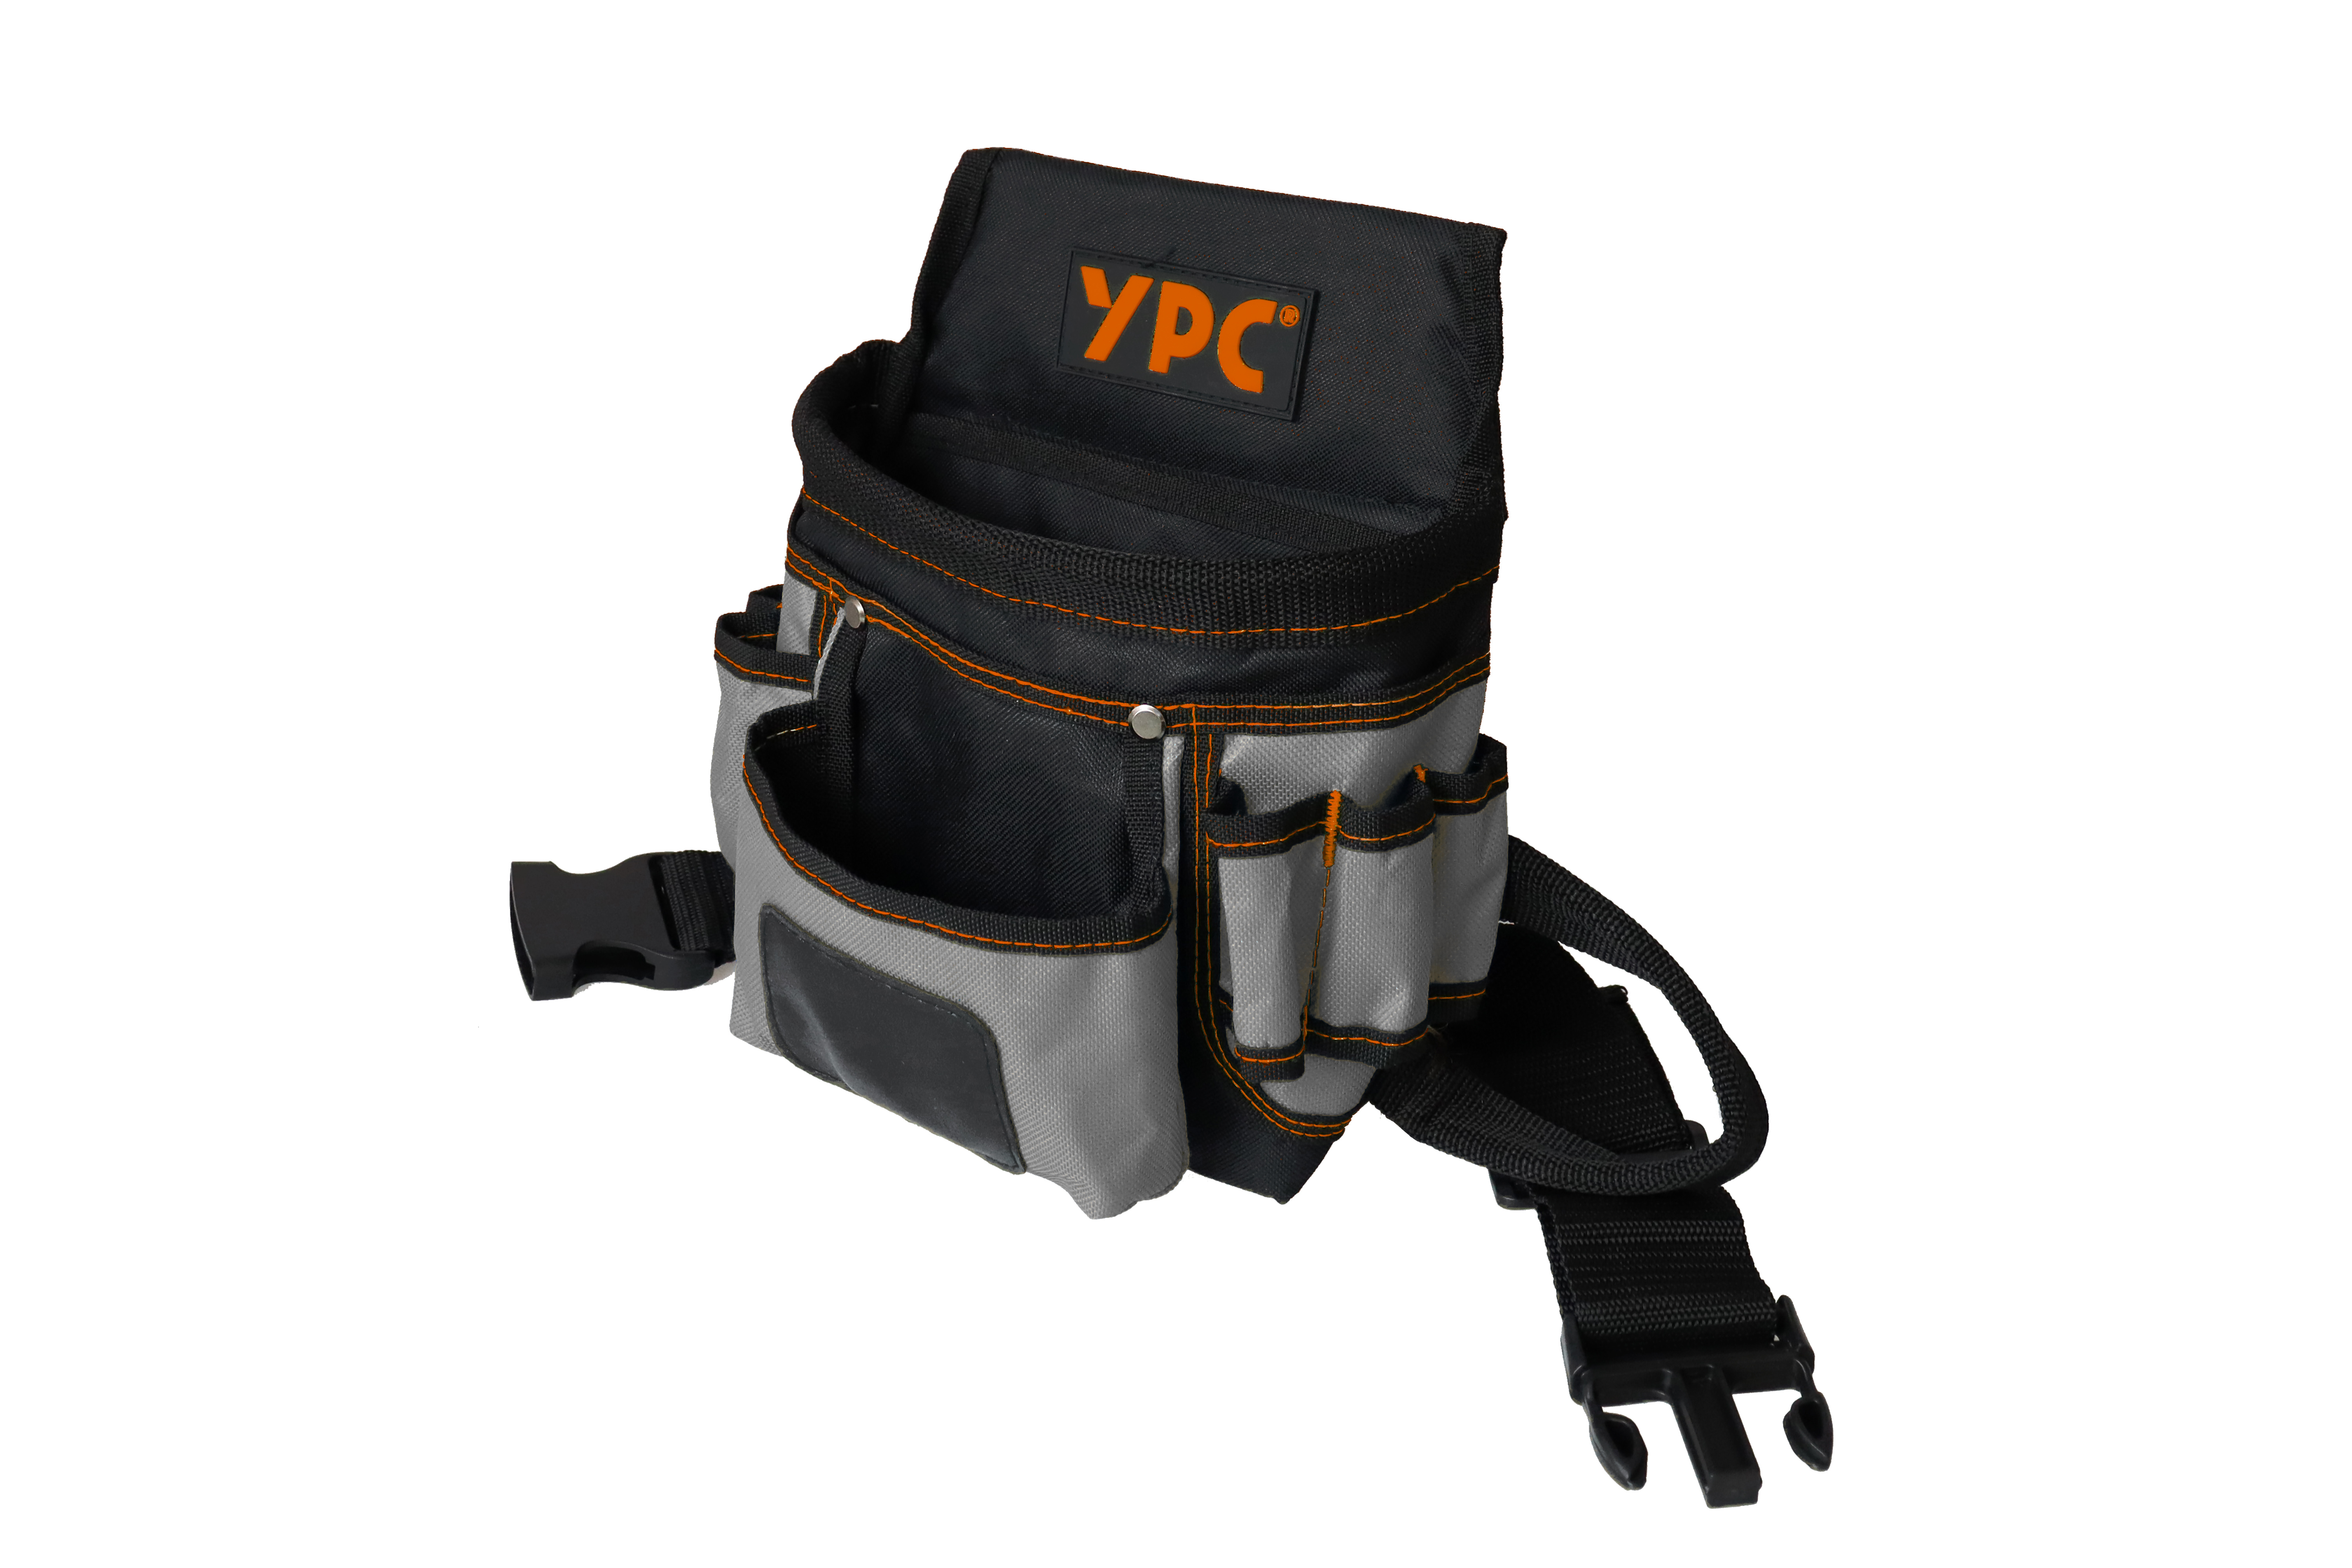 "Presto" belt bag XL, grey-black, 27x21x13cm, 5 kg load capacity